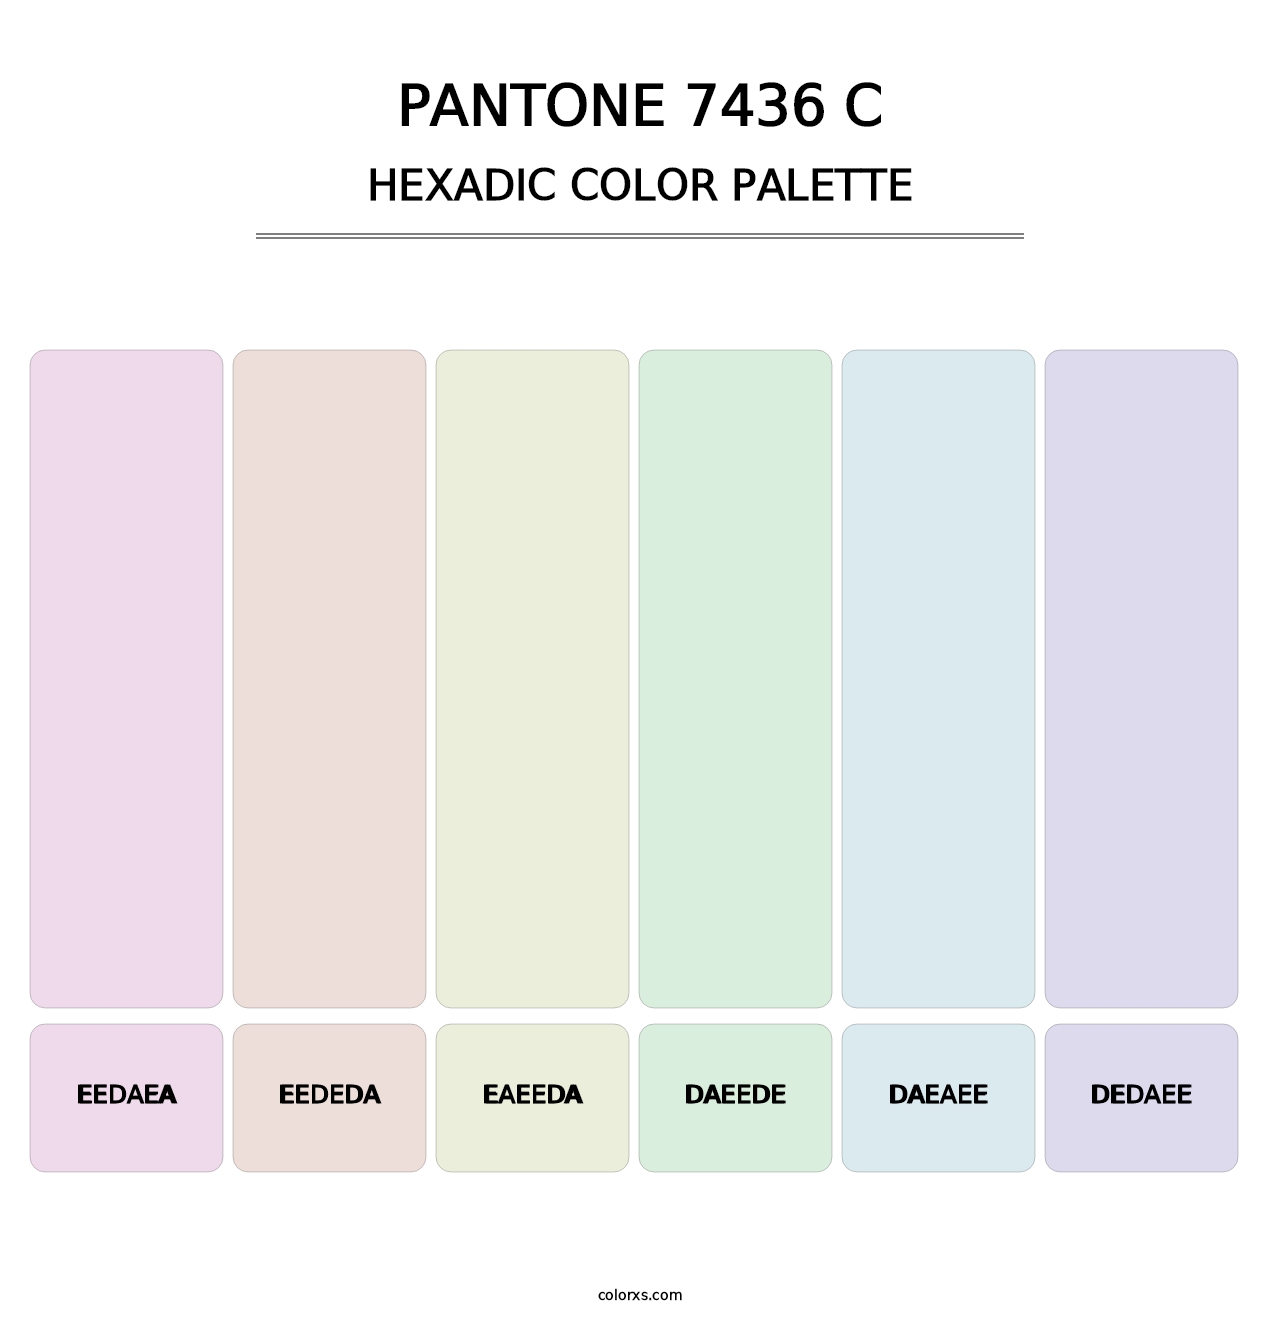 PANTONE 7436 C - Hexadic Color Palette